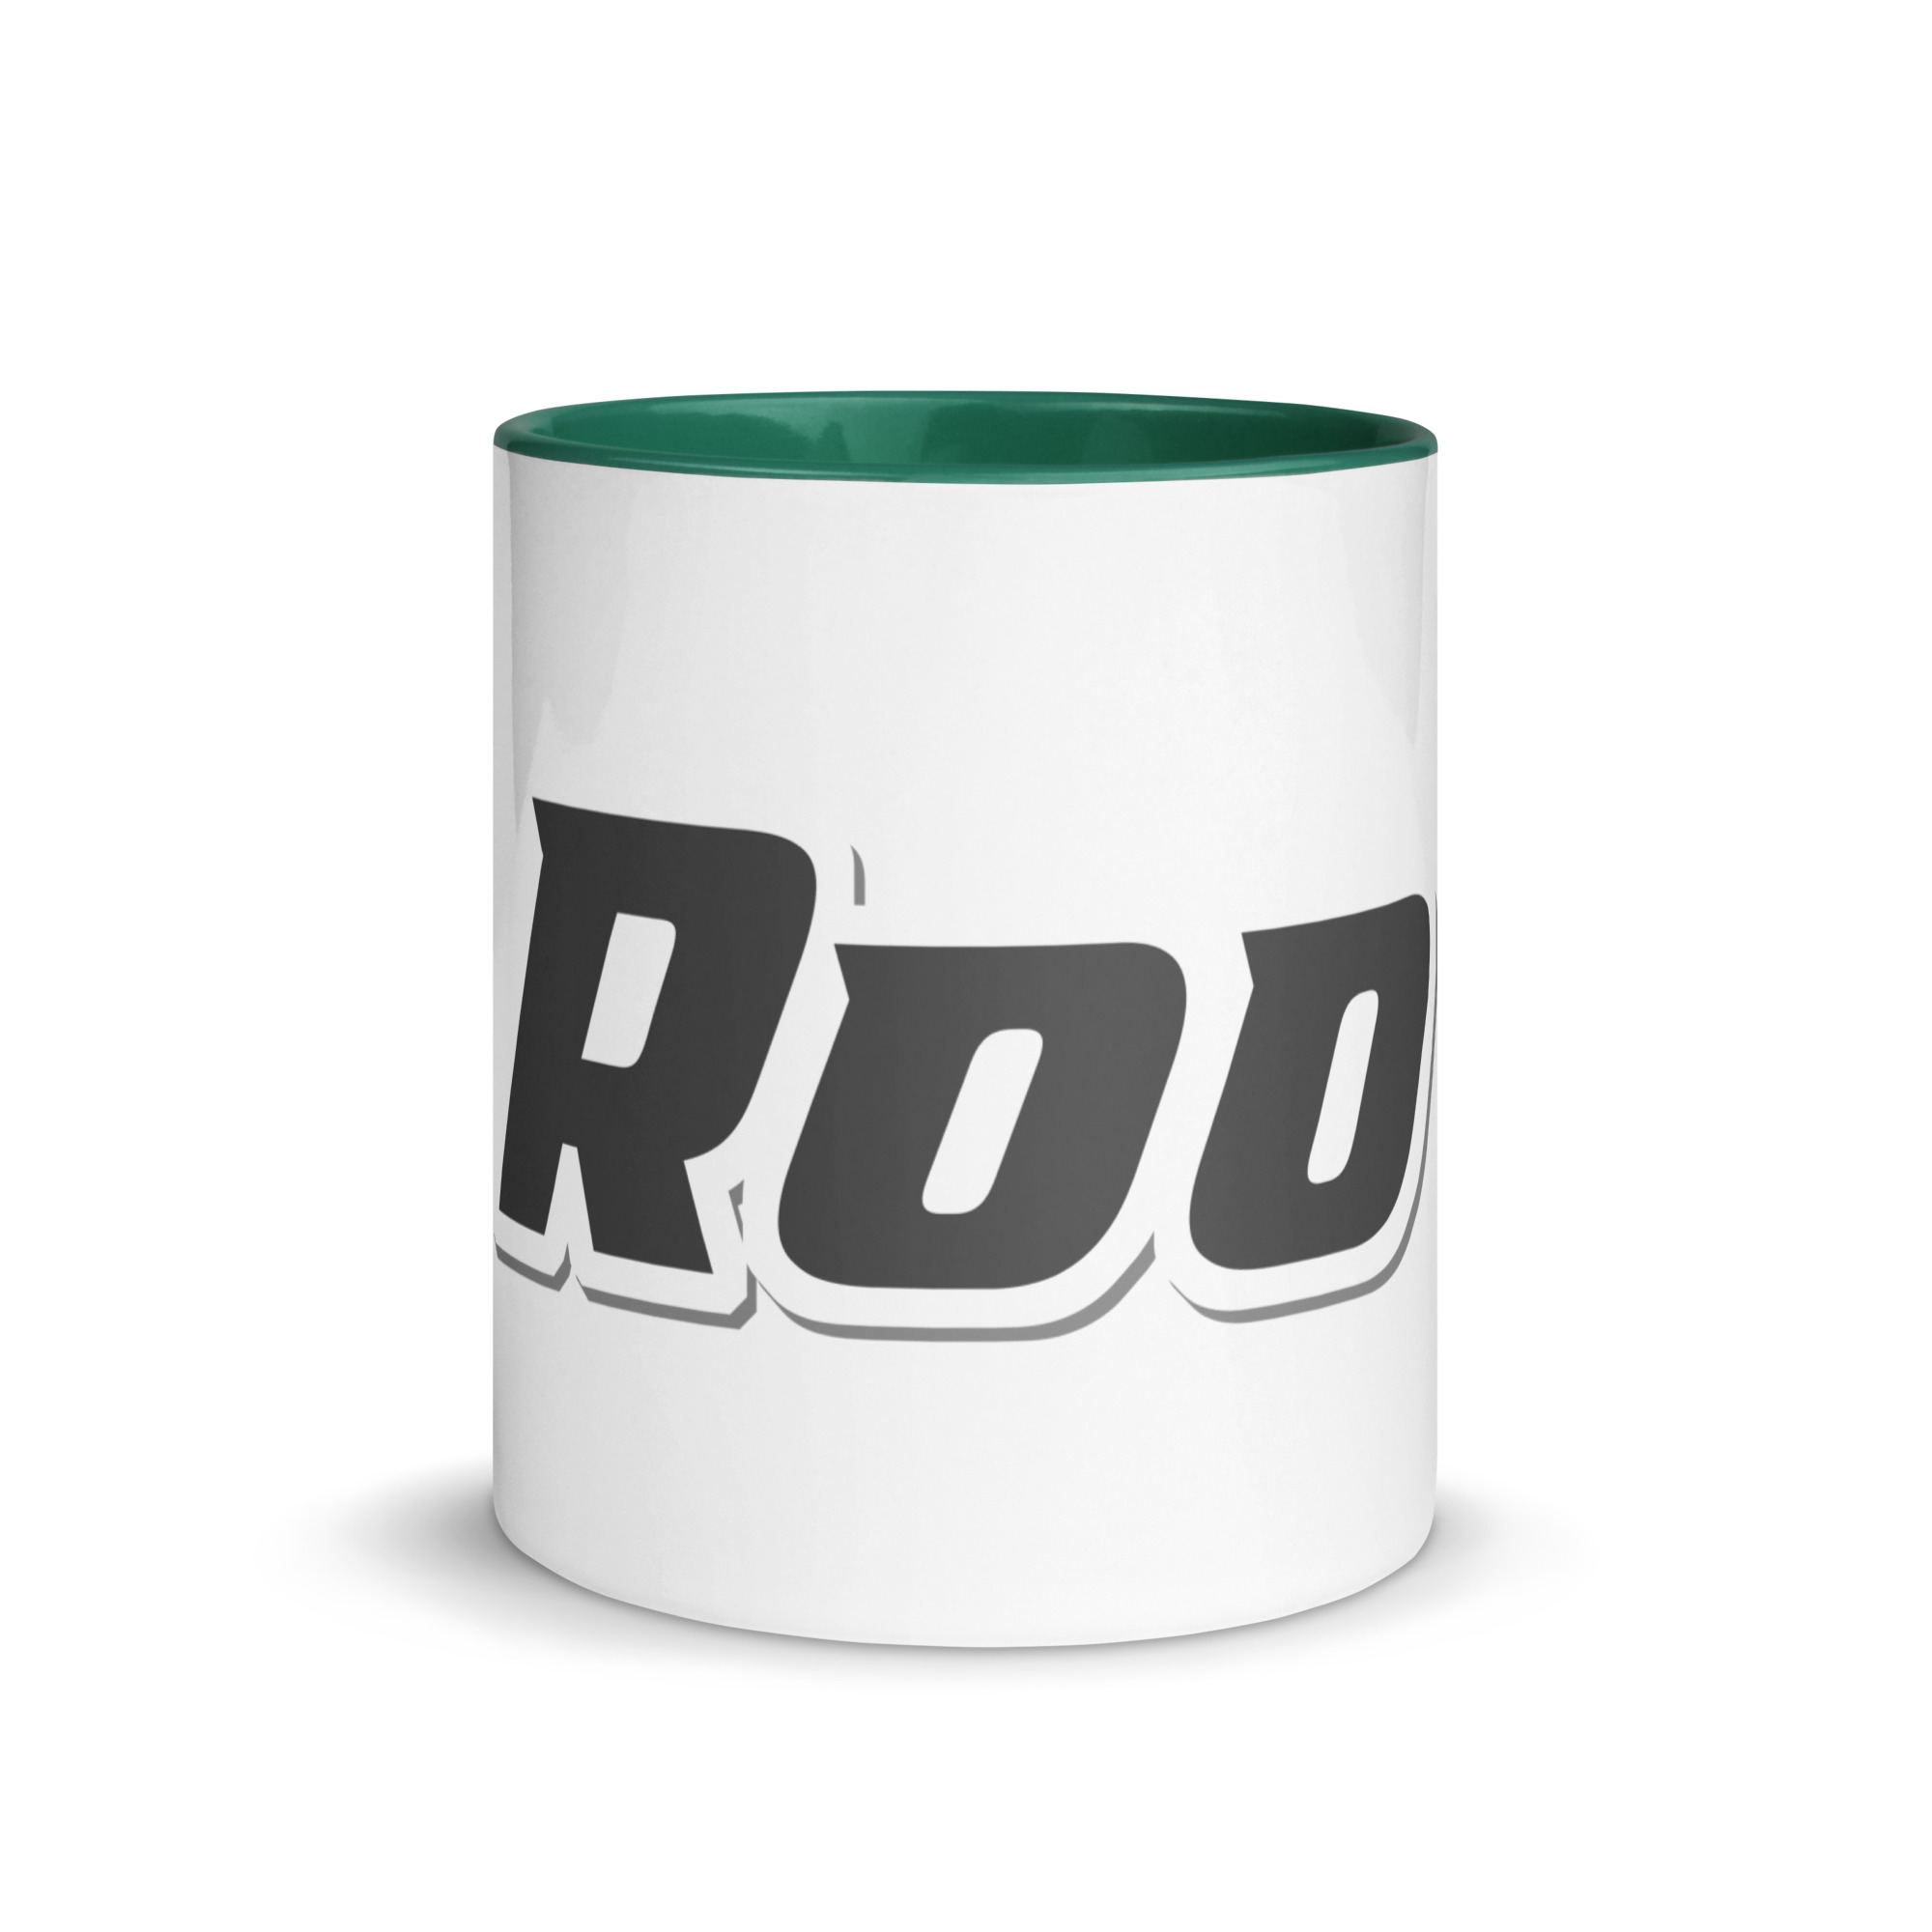 white-ceramic-mug-with-color-inside-dark-green-11-oz-front-6525b50608d25.jpg